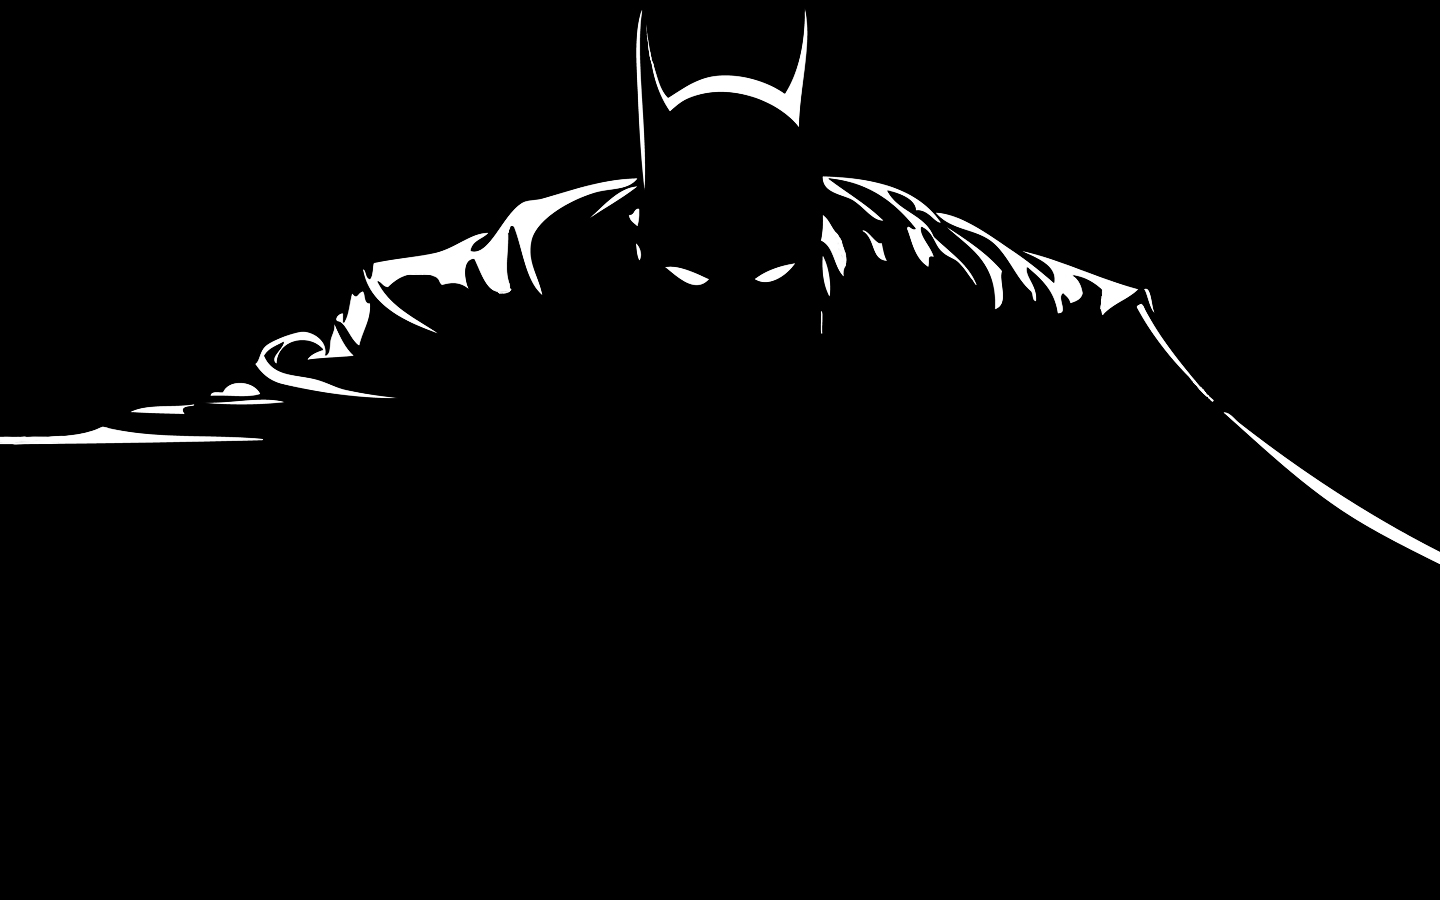 Batman Silhouette Wallpaper | 1440x900 | ID:44038